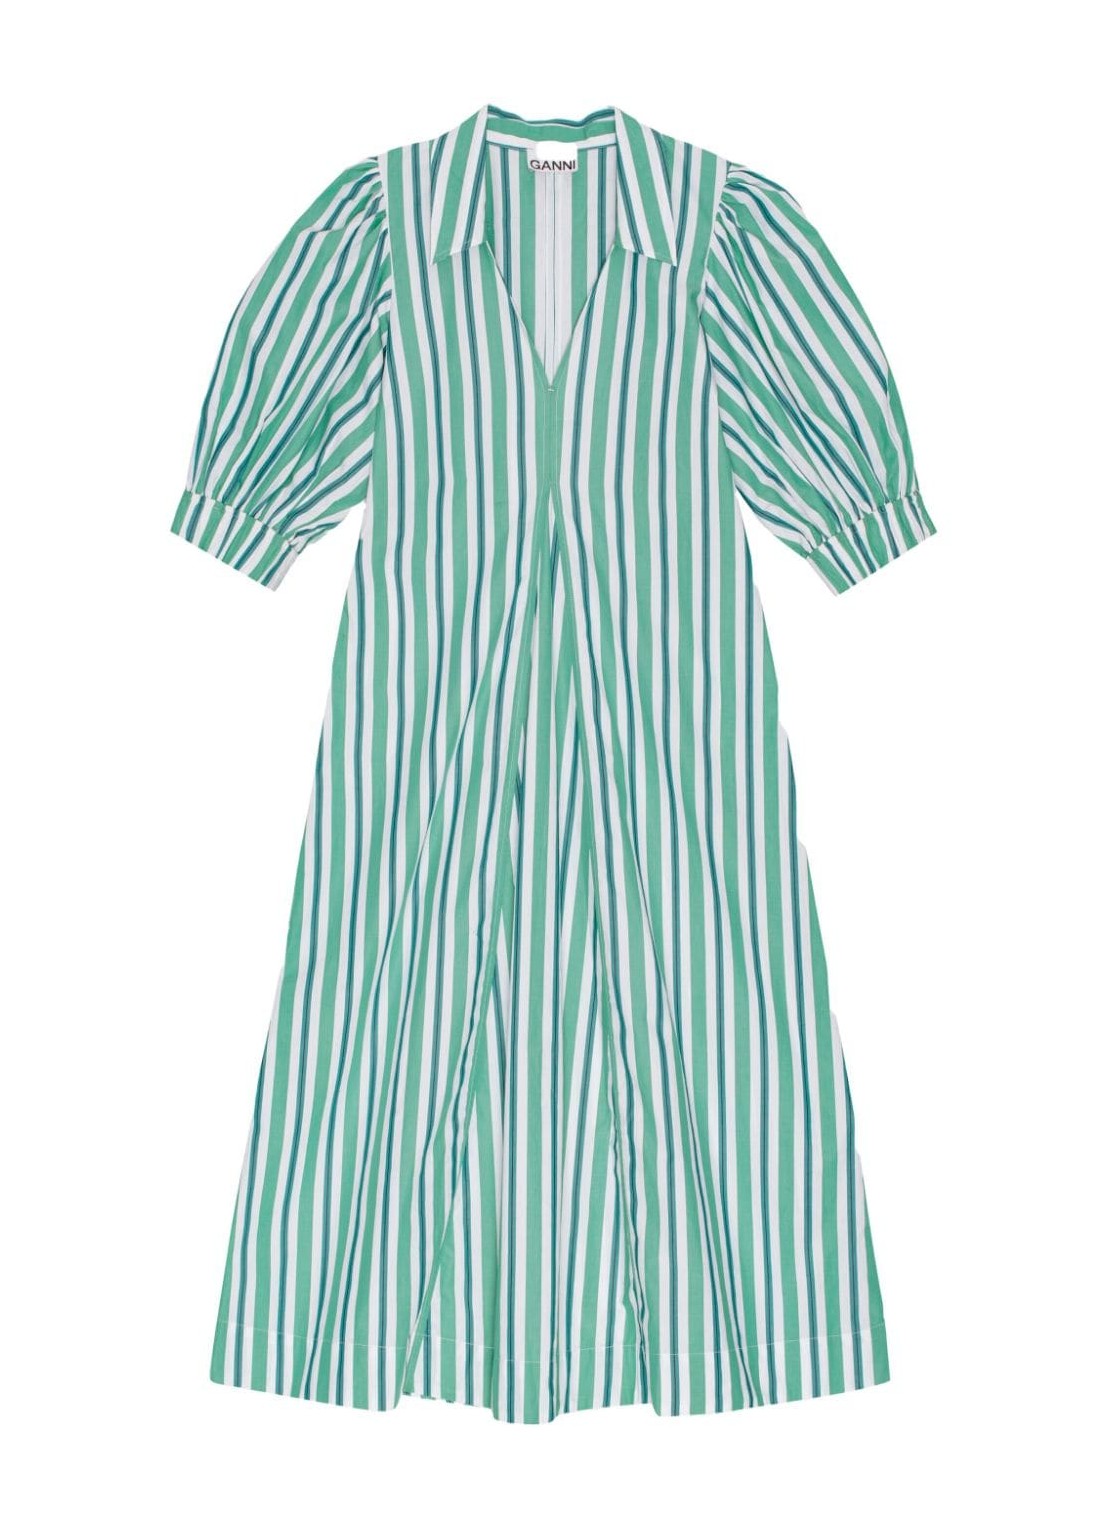 Vestido ganni dress woman stripe cotton collar long dress f9018 879 talla verde
 